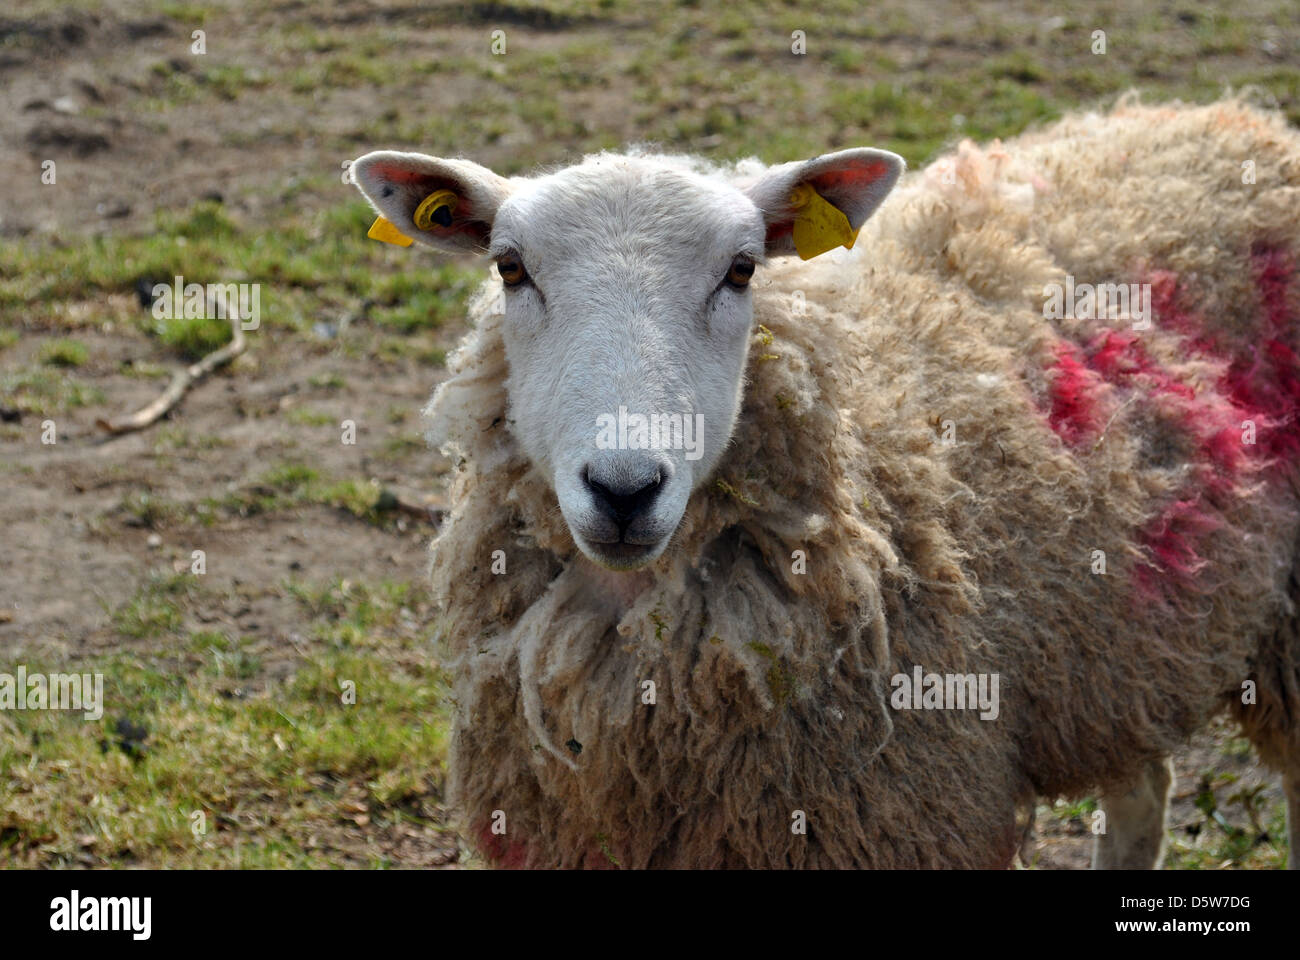 close up portrait single sheep Stock Photo